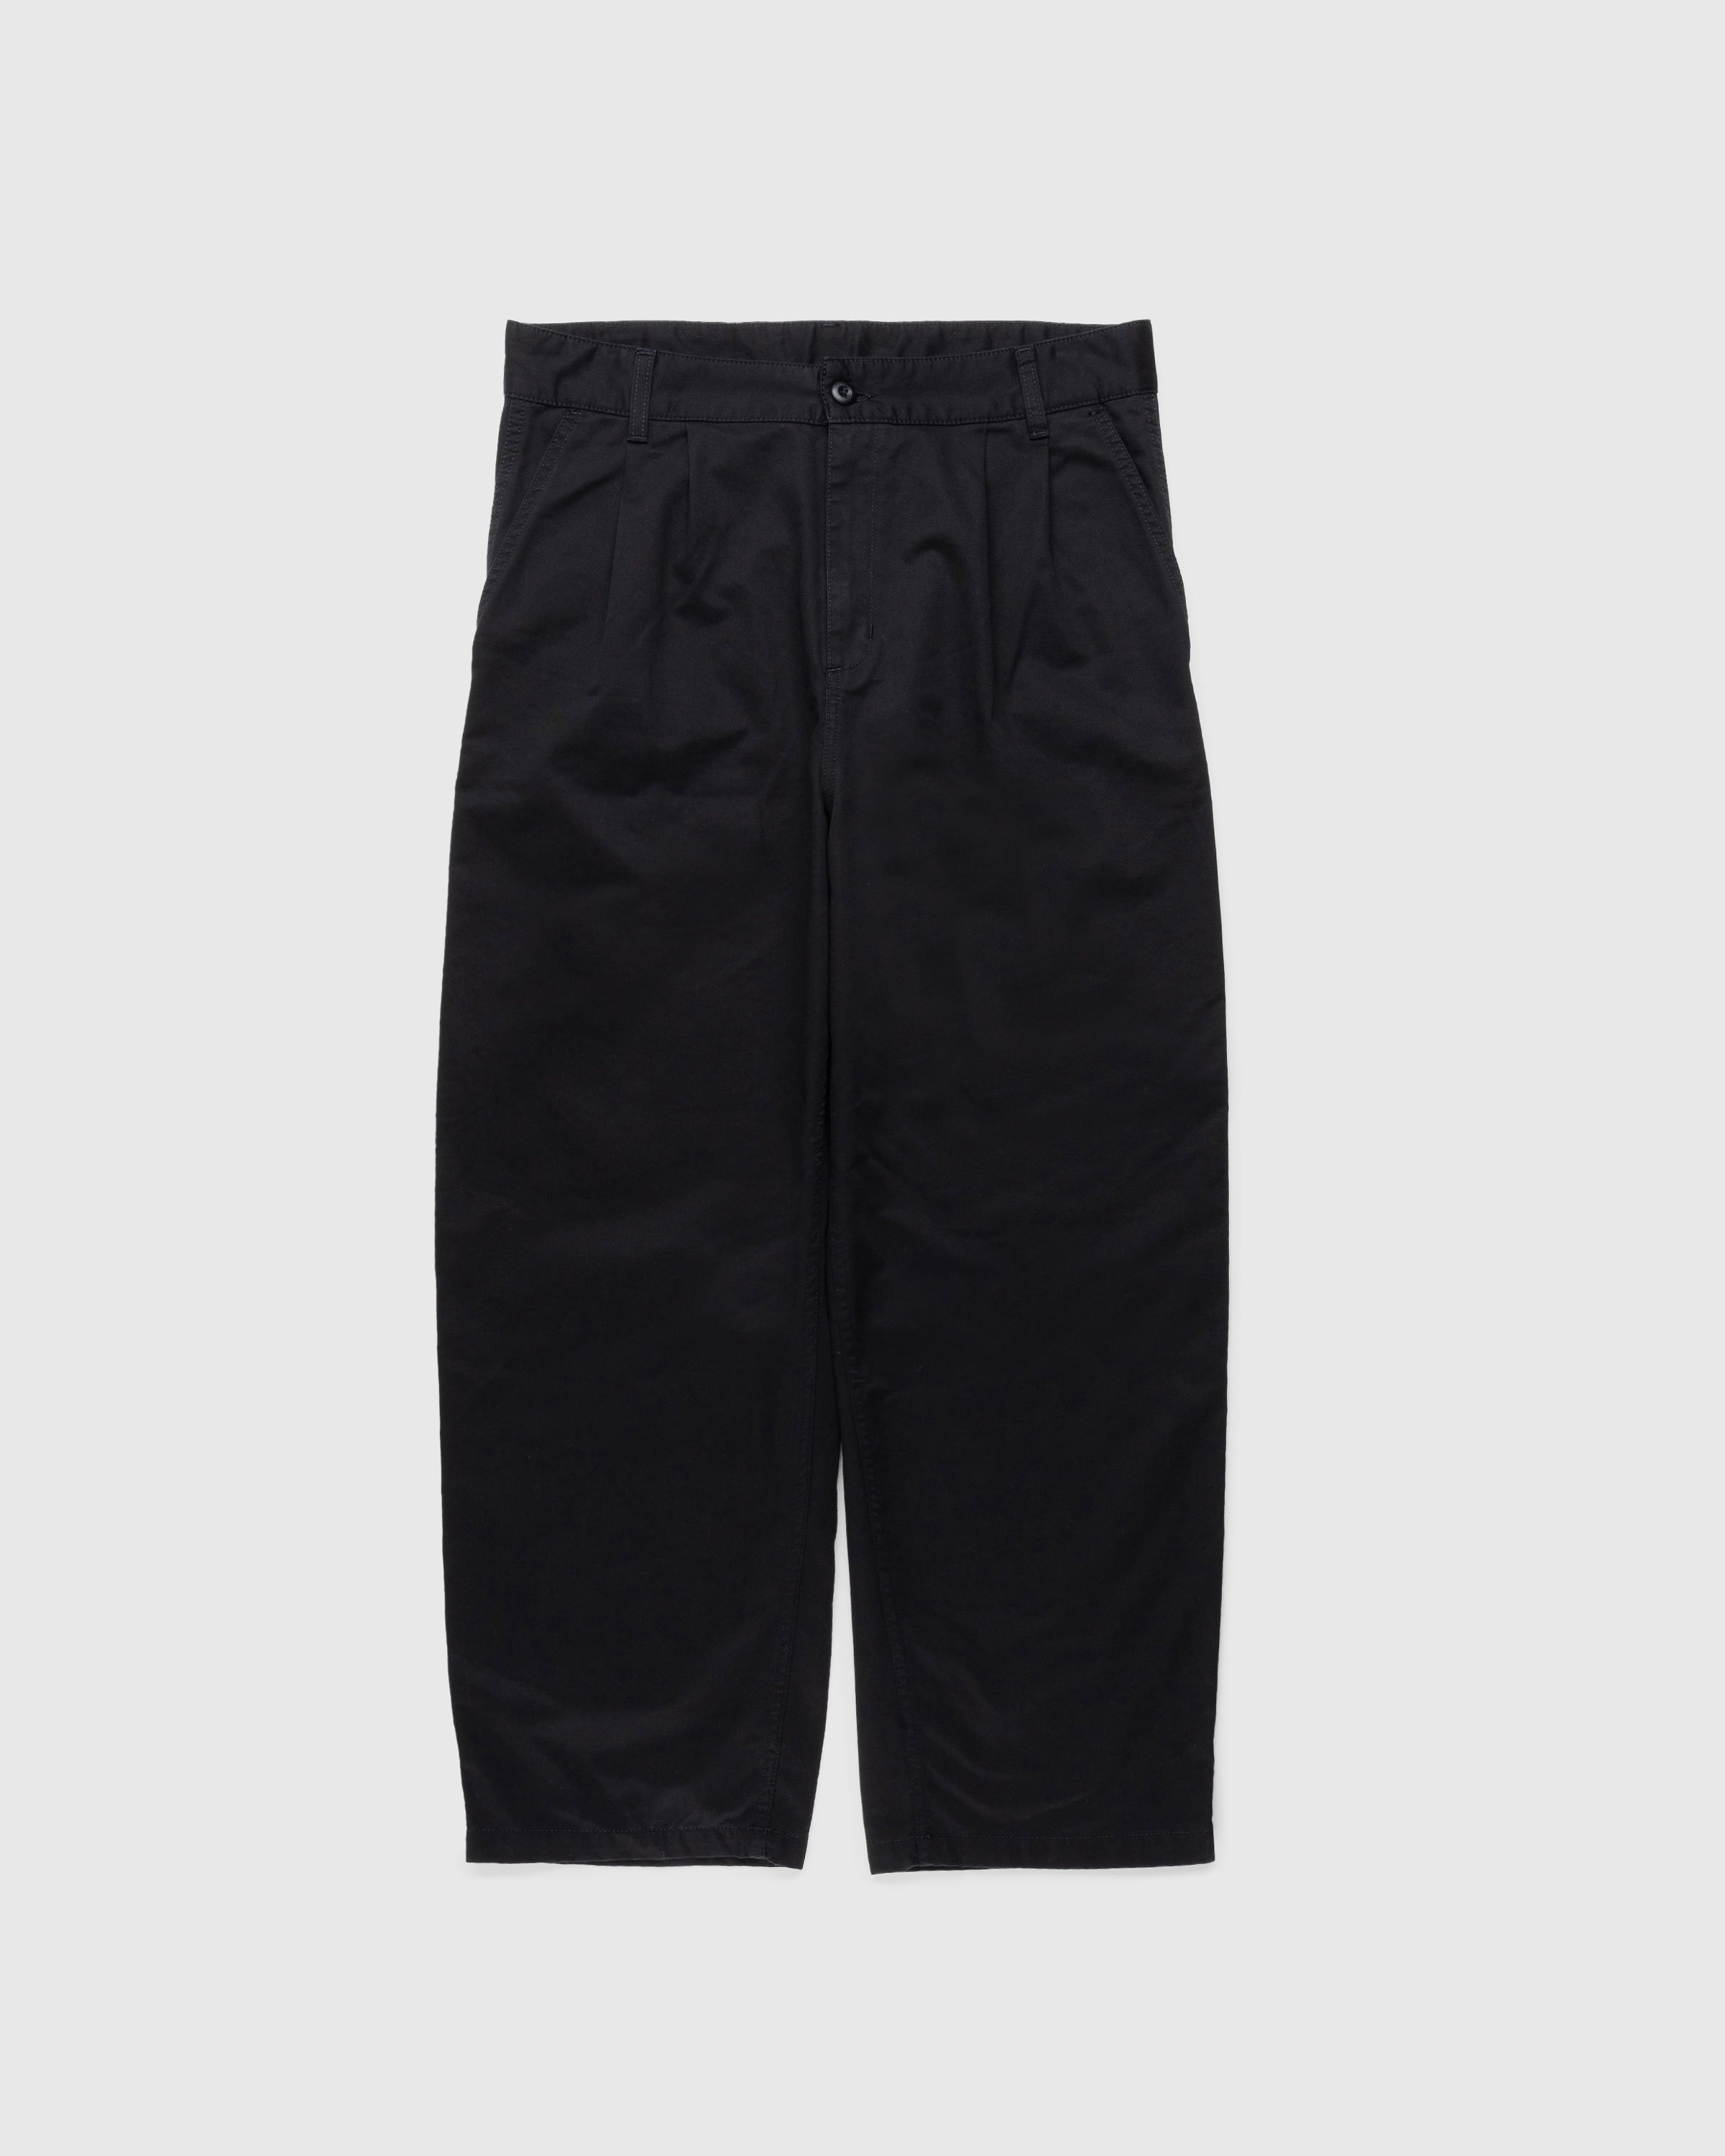 Carhartt WIP – Colston Pant Stonewashed Black - Pants - Black - Image 1